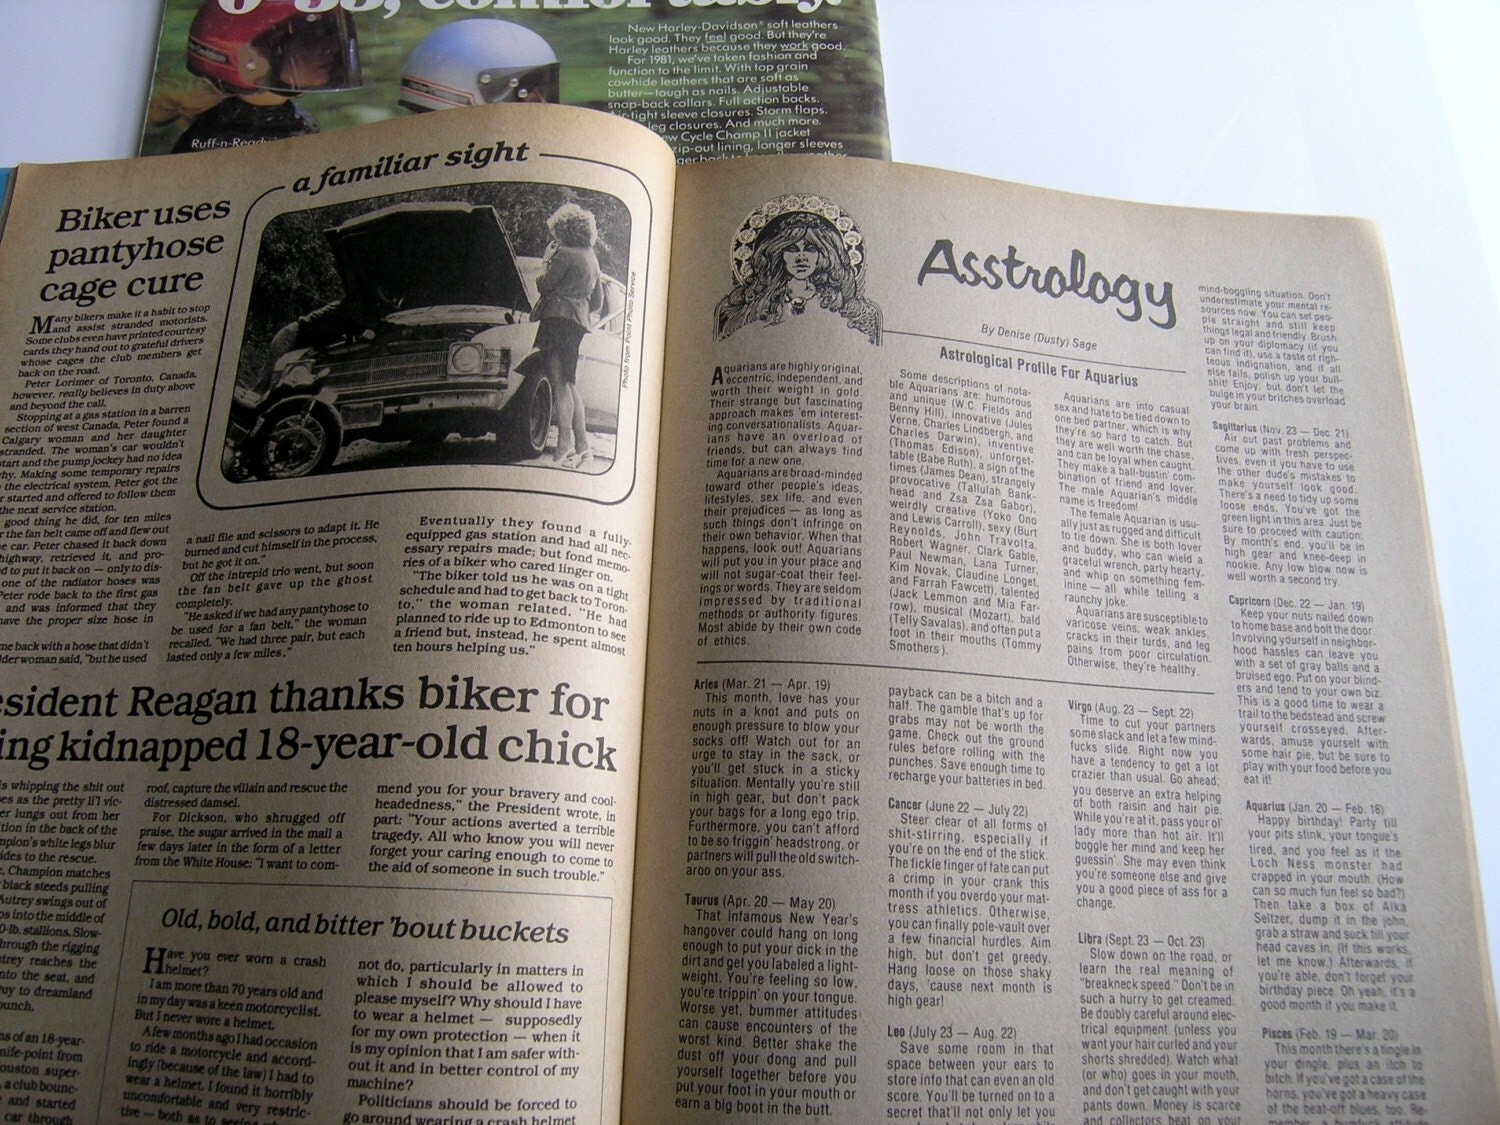 easy rider magazine covers 1980s